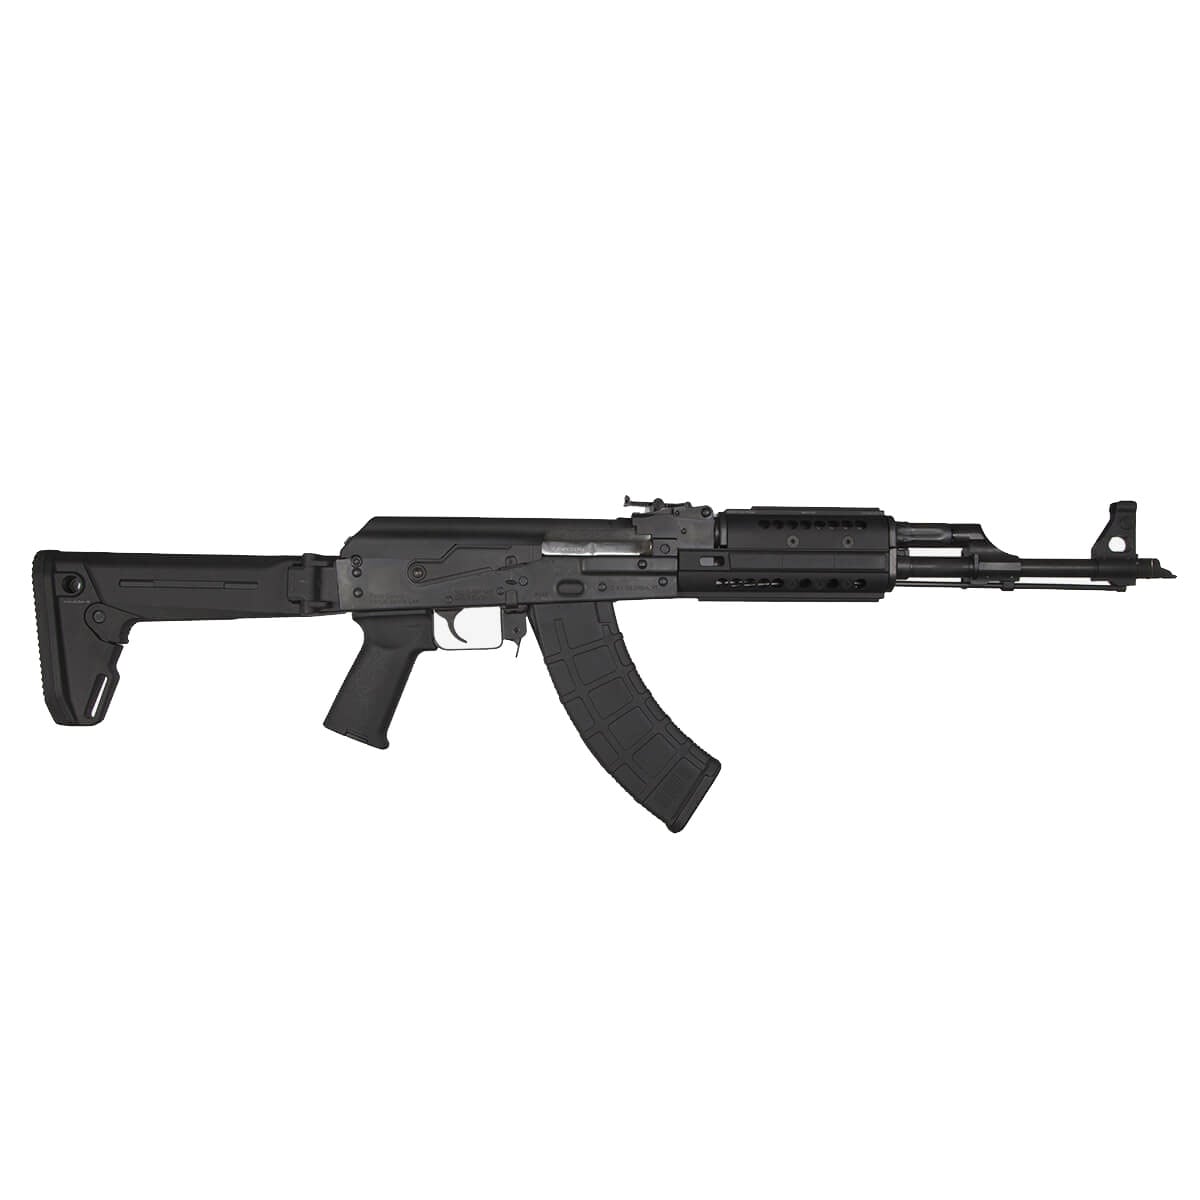 Chwyt pistoletowy Magpul MOE AK Grip do karabinków AK47/AK74 - Plum